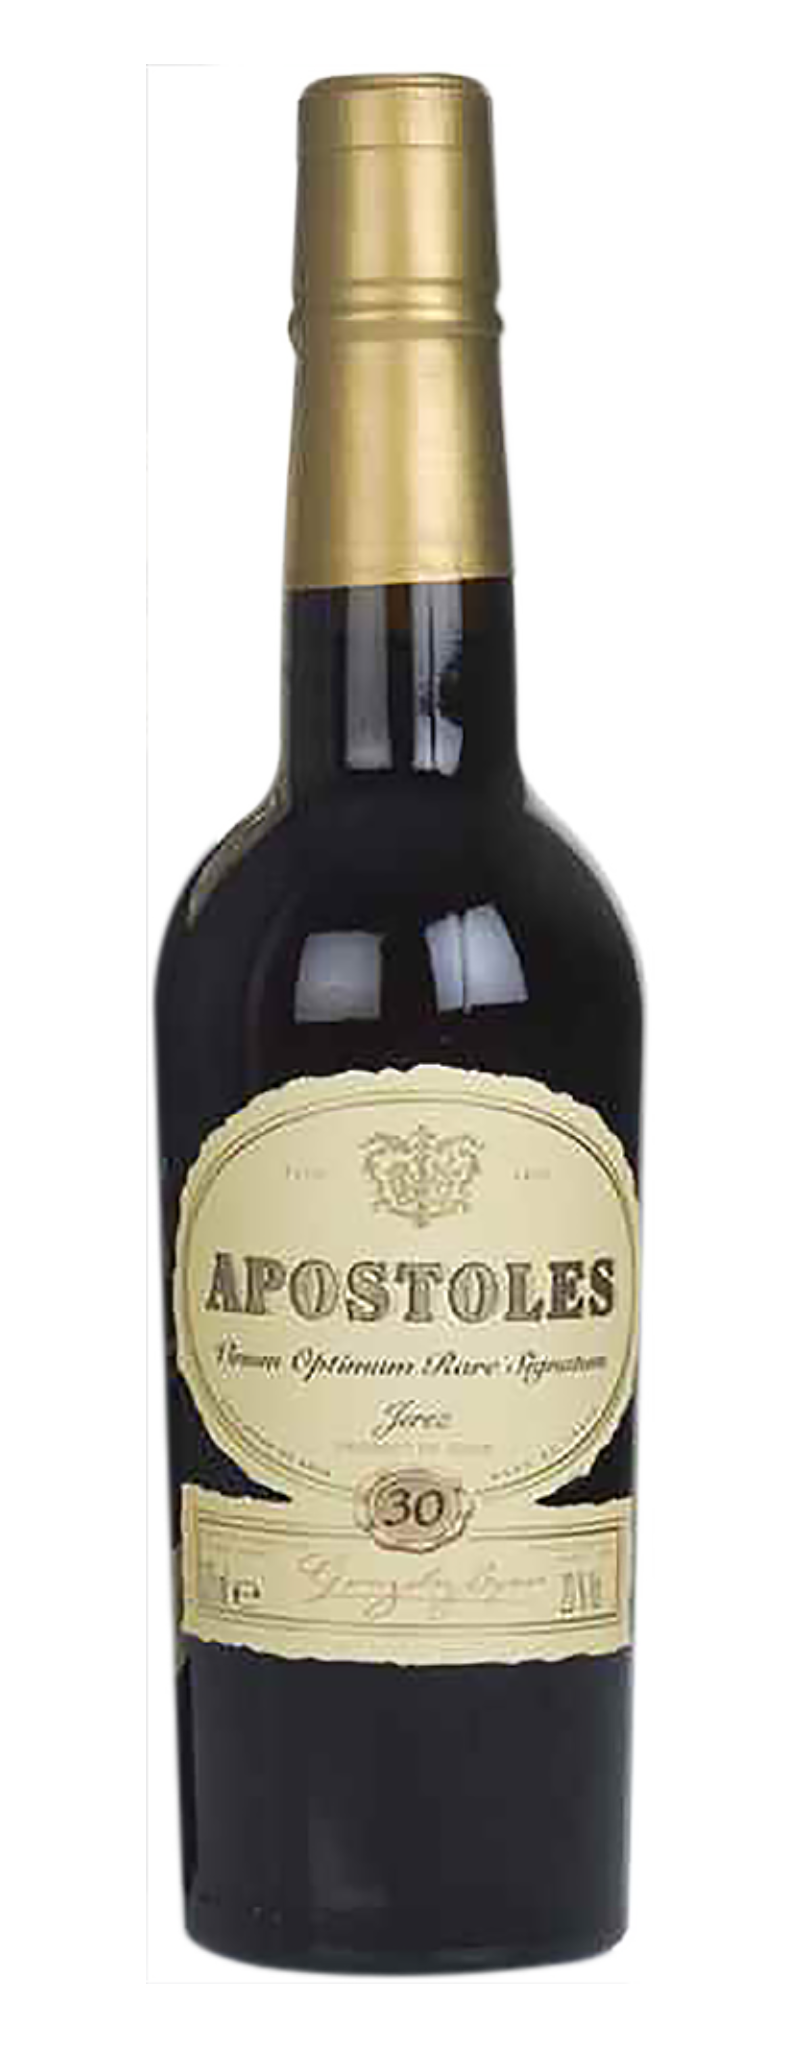 Gonzalez Byass, "Apostoles" Medium Cream Very Old Palo Cortado, V.O.R 30 Years, Jerez  - 750ml